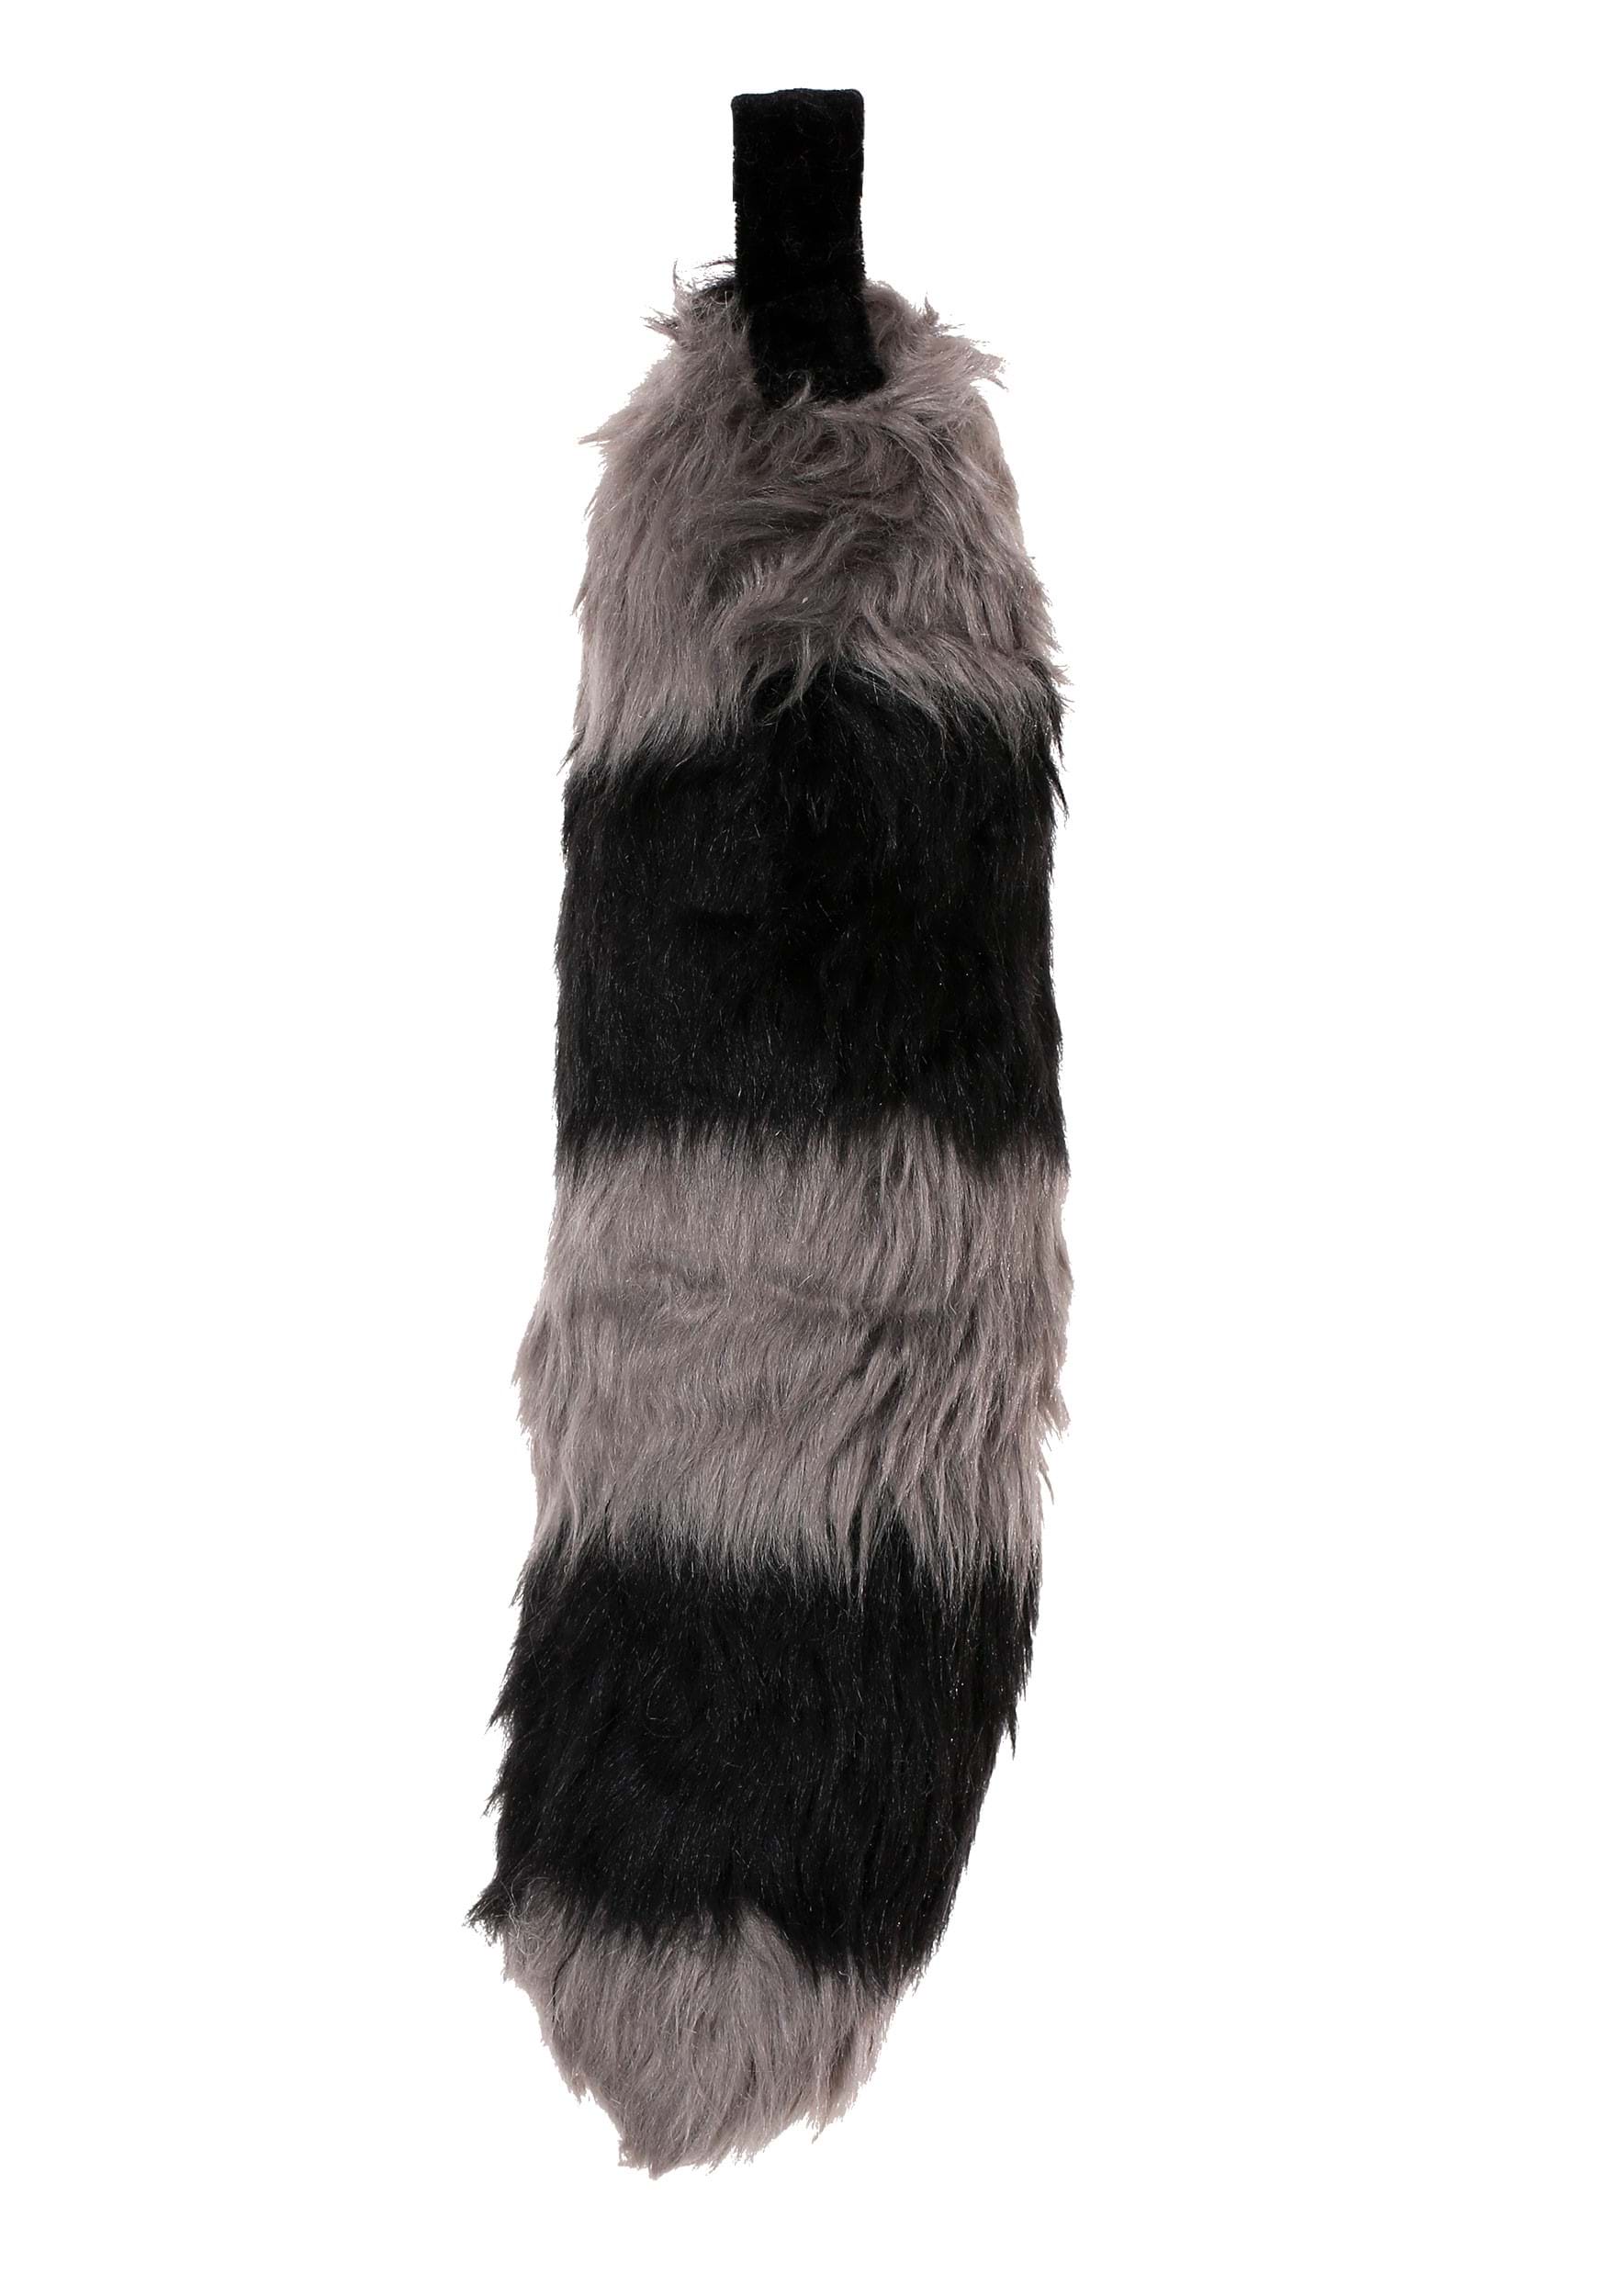 Raccoon Ears And Tail Set